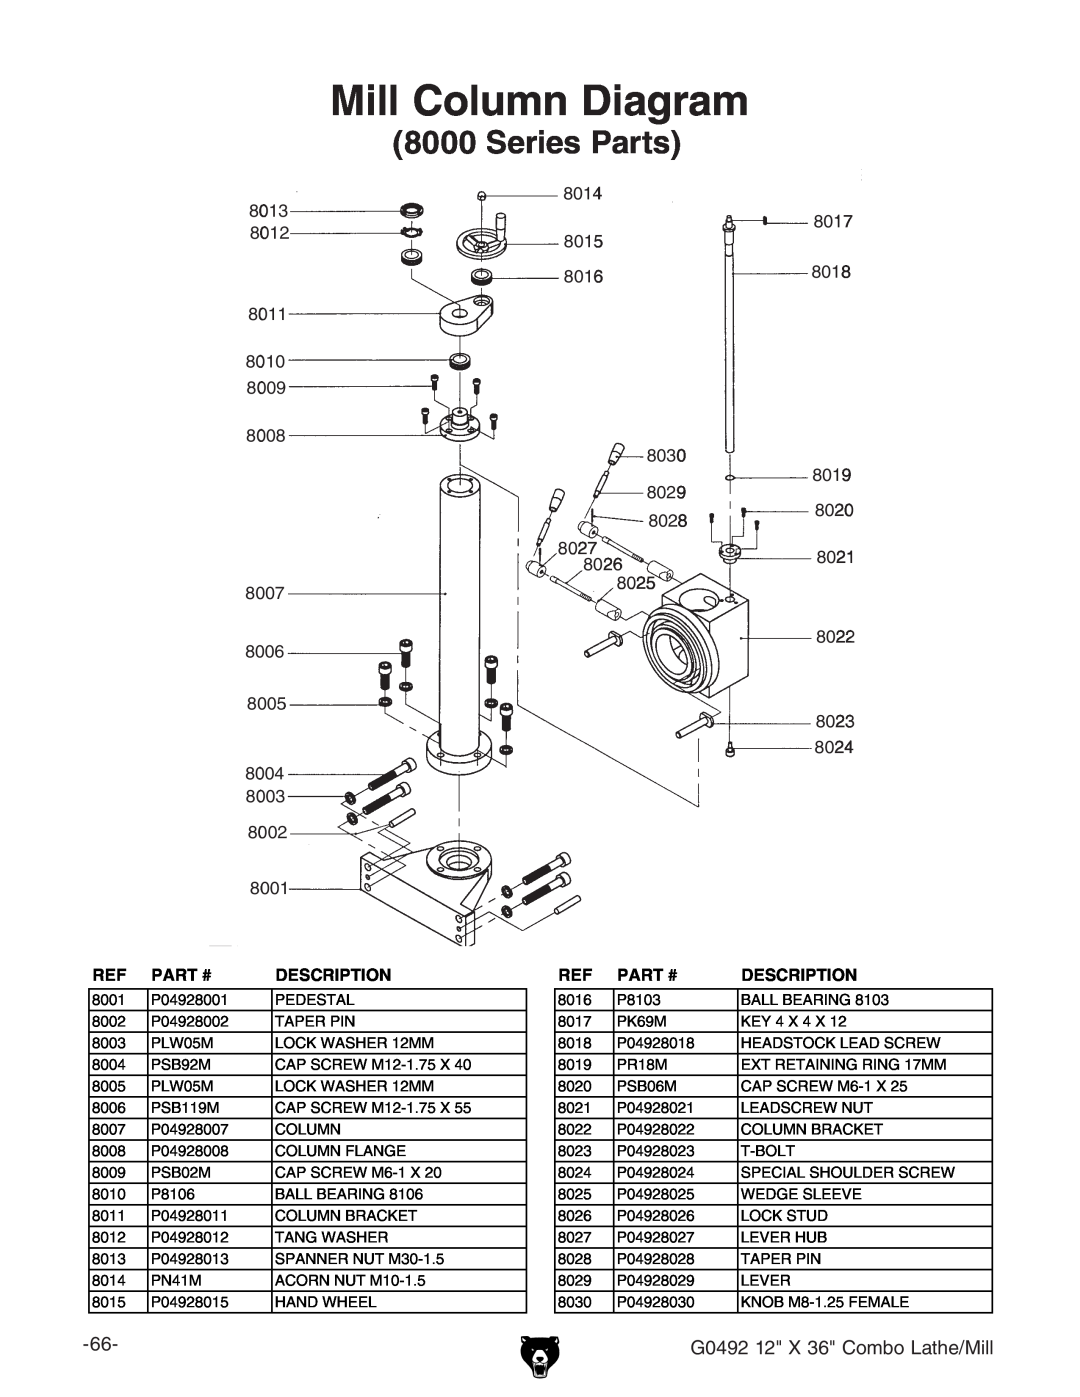 Grizzly G0492 manual Mill Column Diagram, Series Parts, &M+8dbWdAViZ$Baa, Part #, Description 